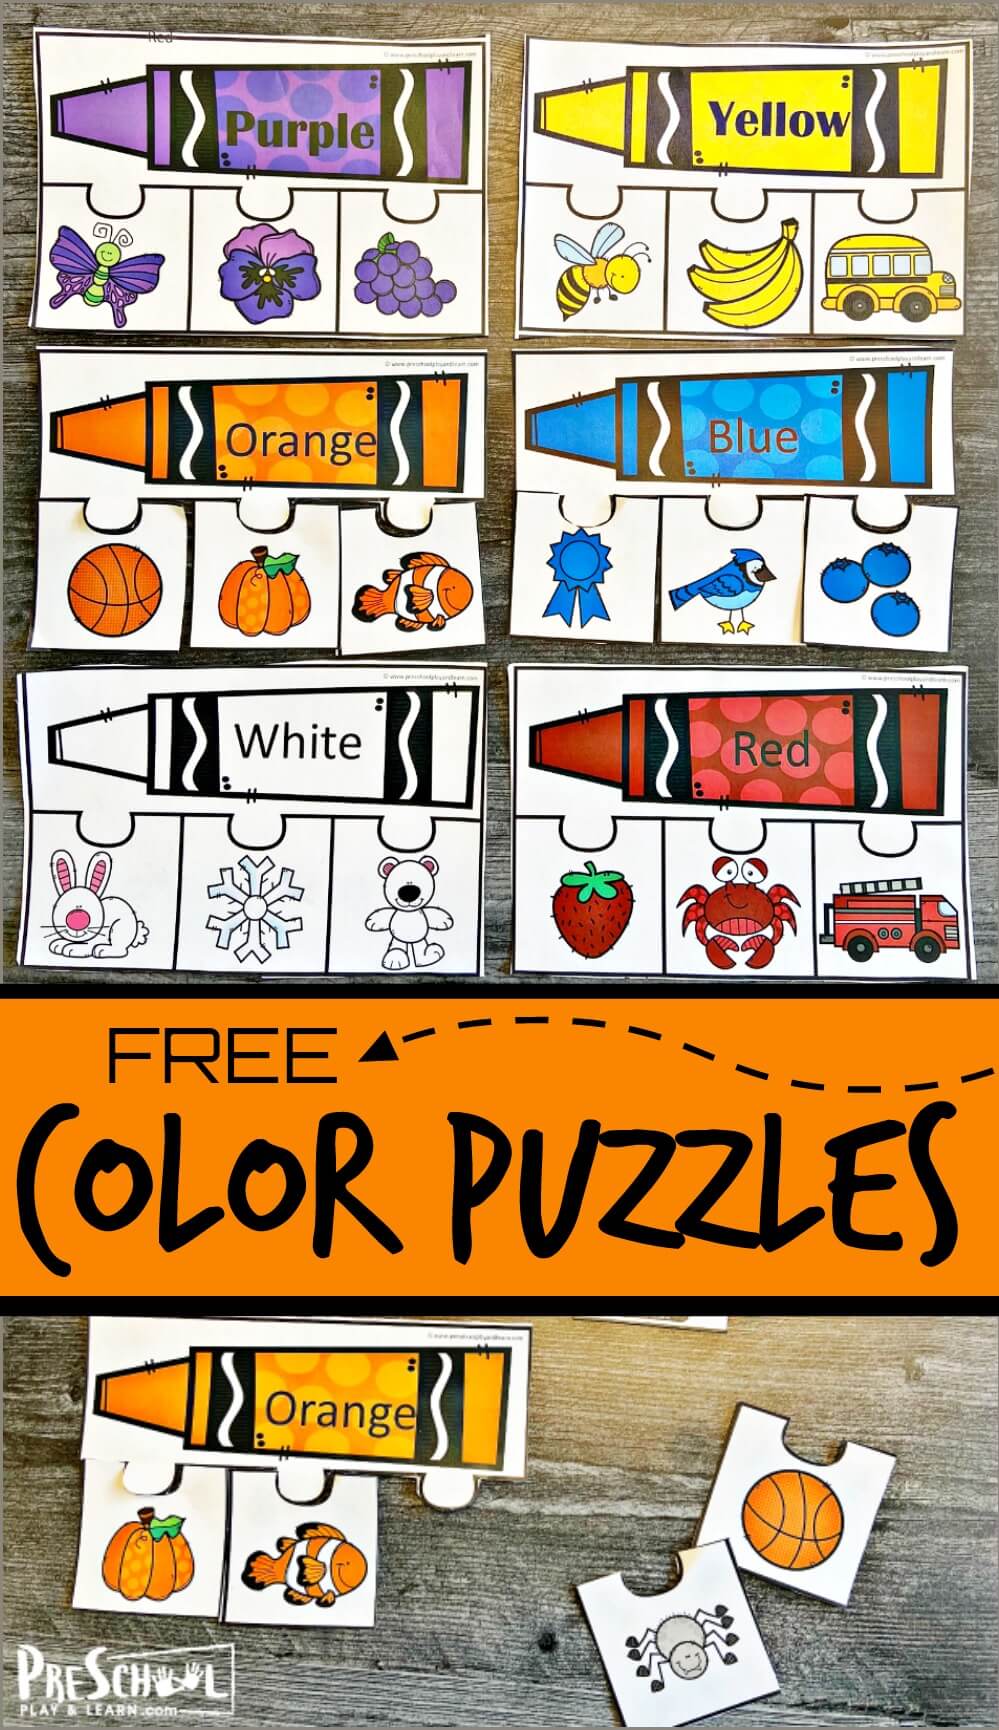 Color Puzzle Online - Free Play & No Download